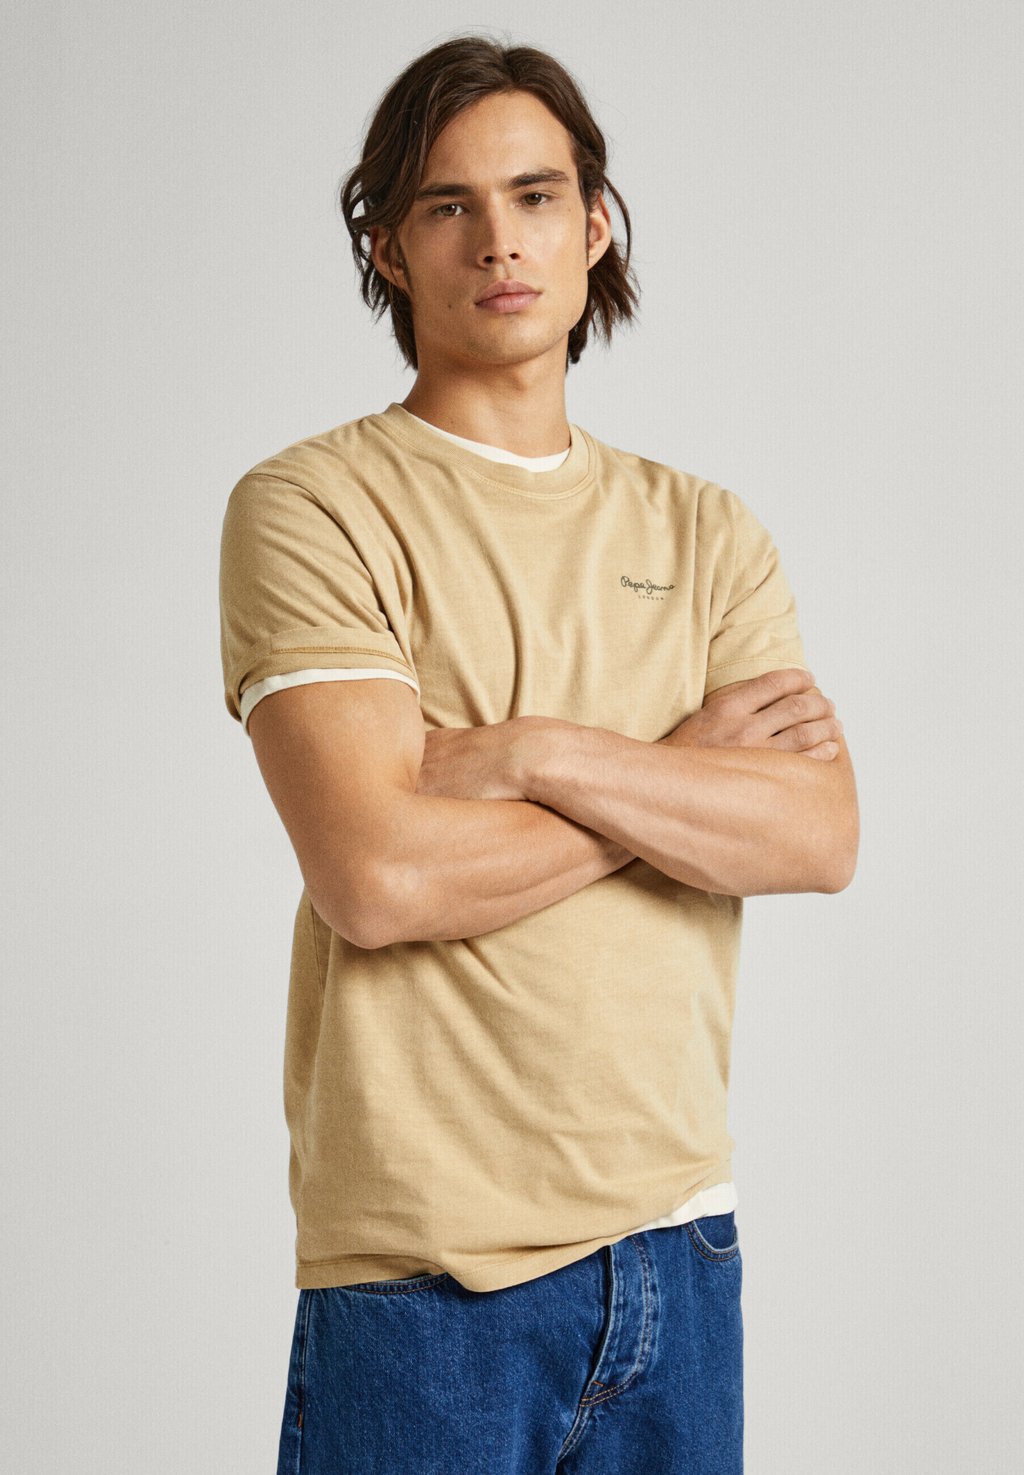 Базовая футболка JACKO Pepe Jeans, бежевый меланж